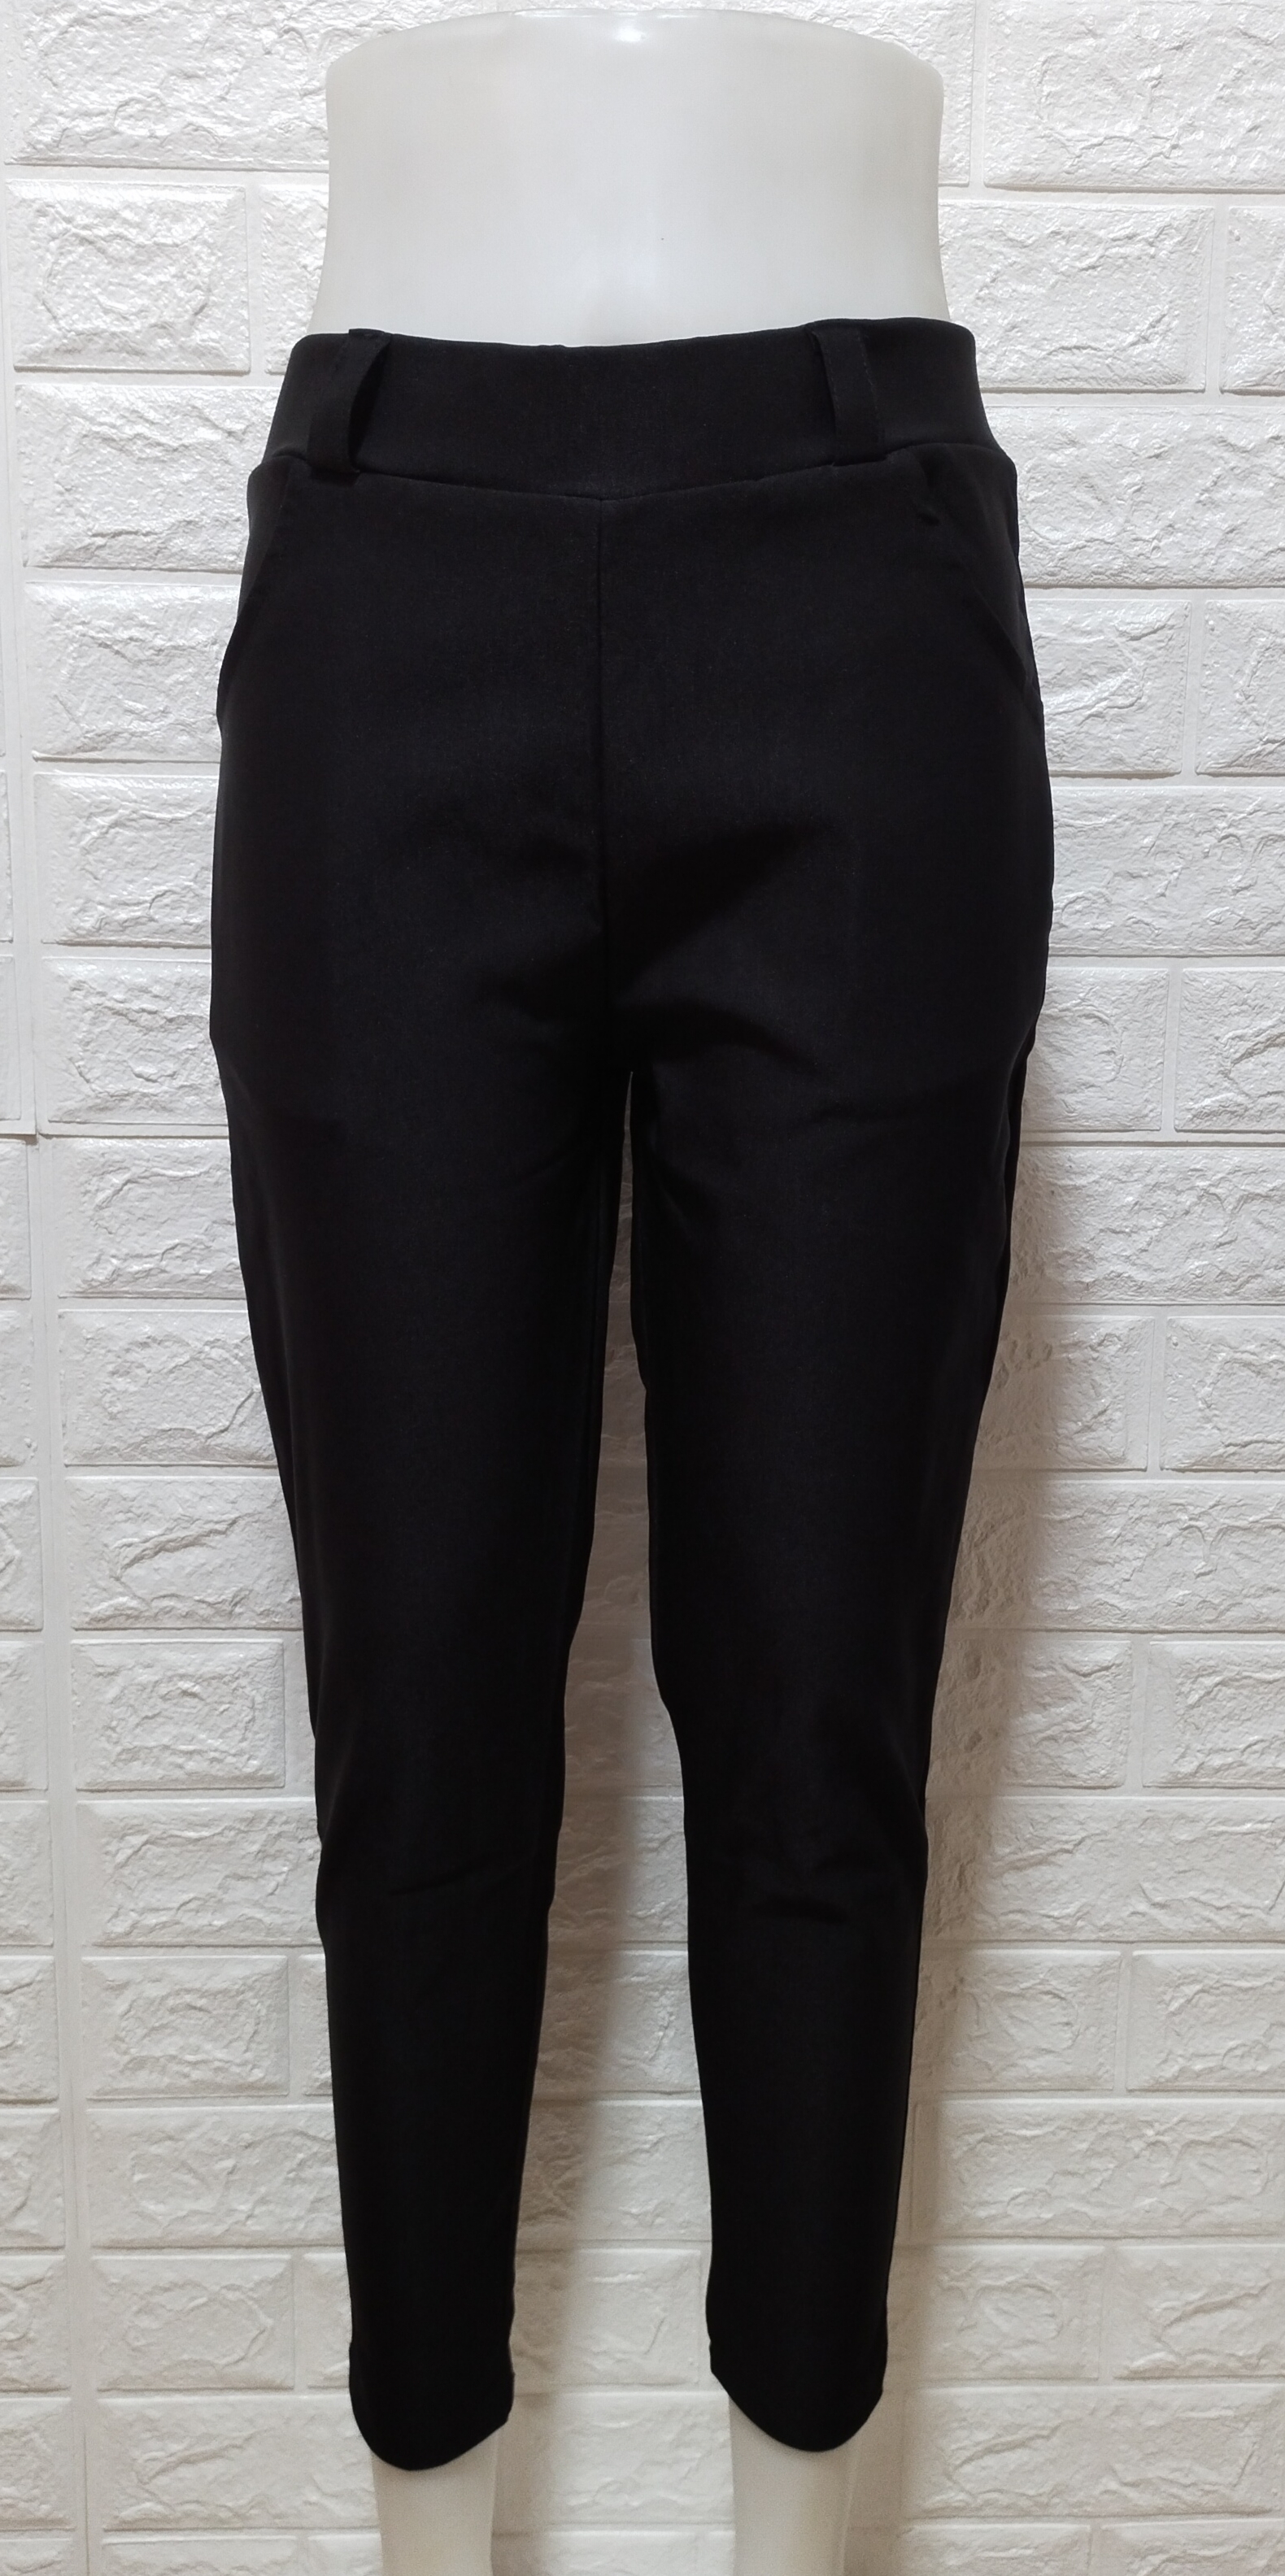 Flare trousers COLOUR black - RESERVED - 4993V-99X-anthinhphatland.vn